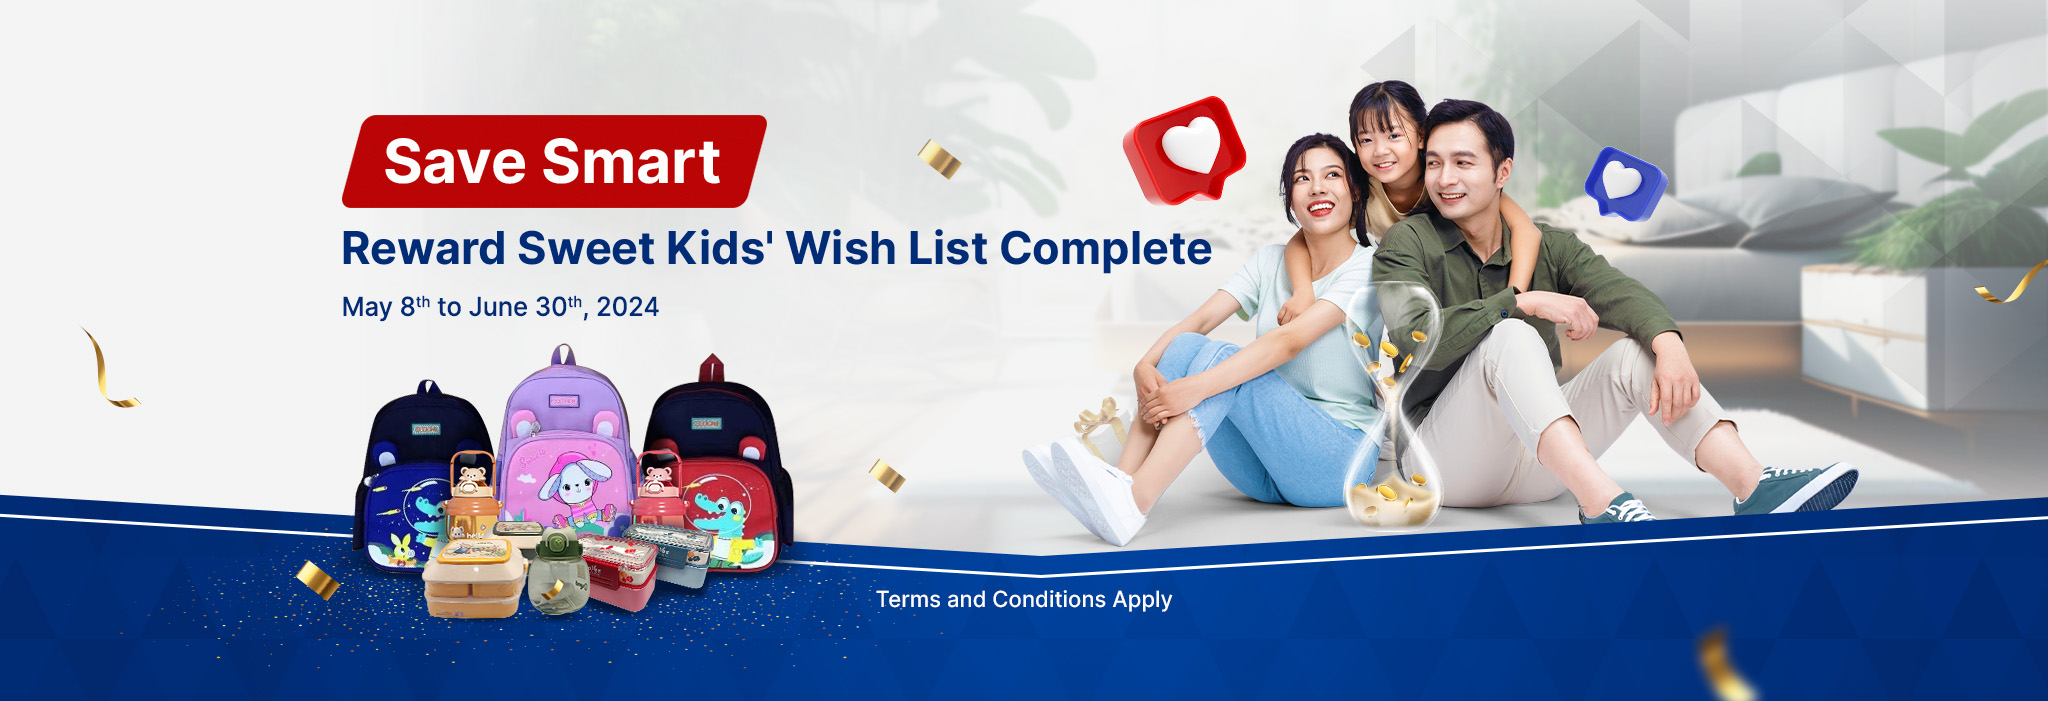 Save Smart, Reward Sweet Kids' Wish List Complete